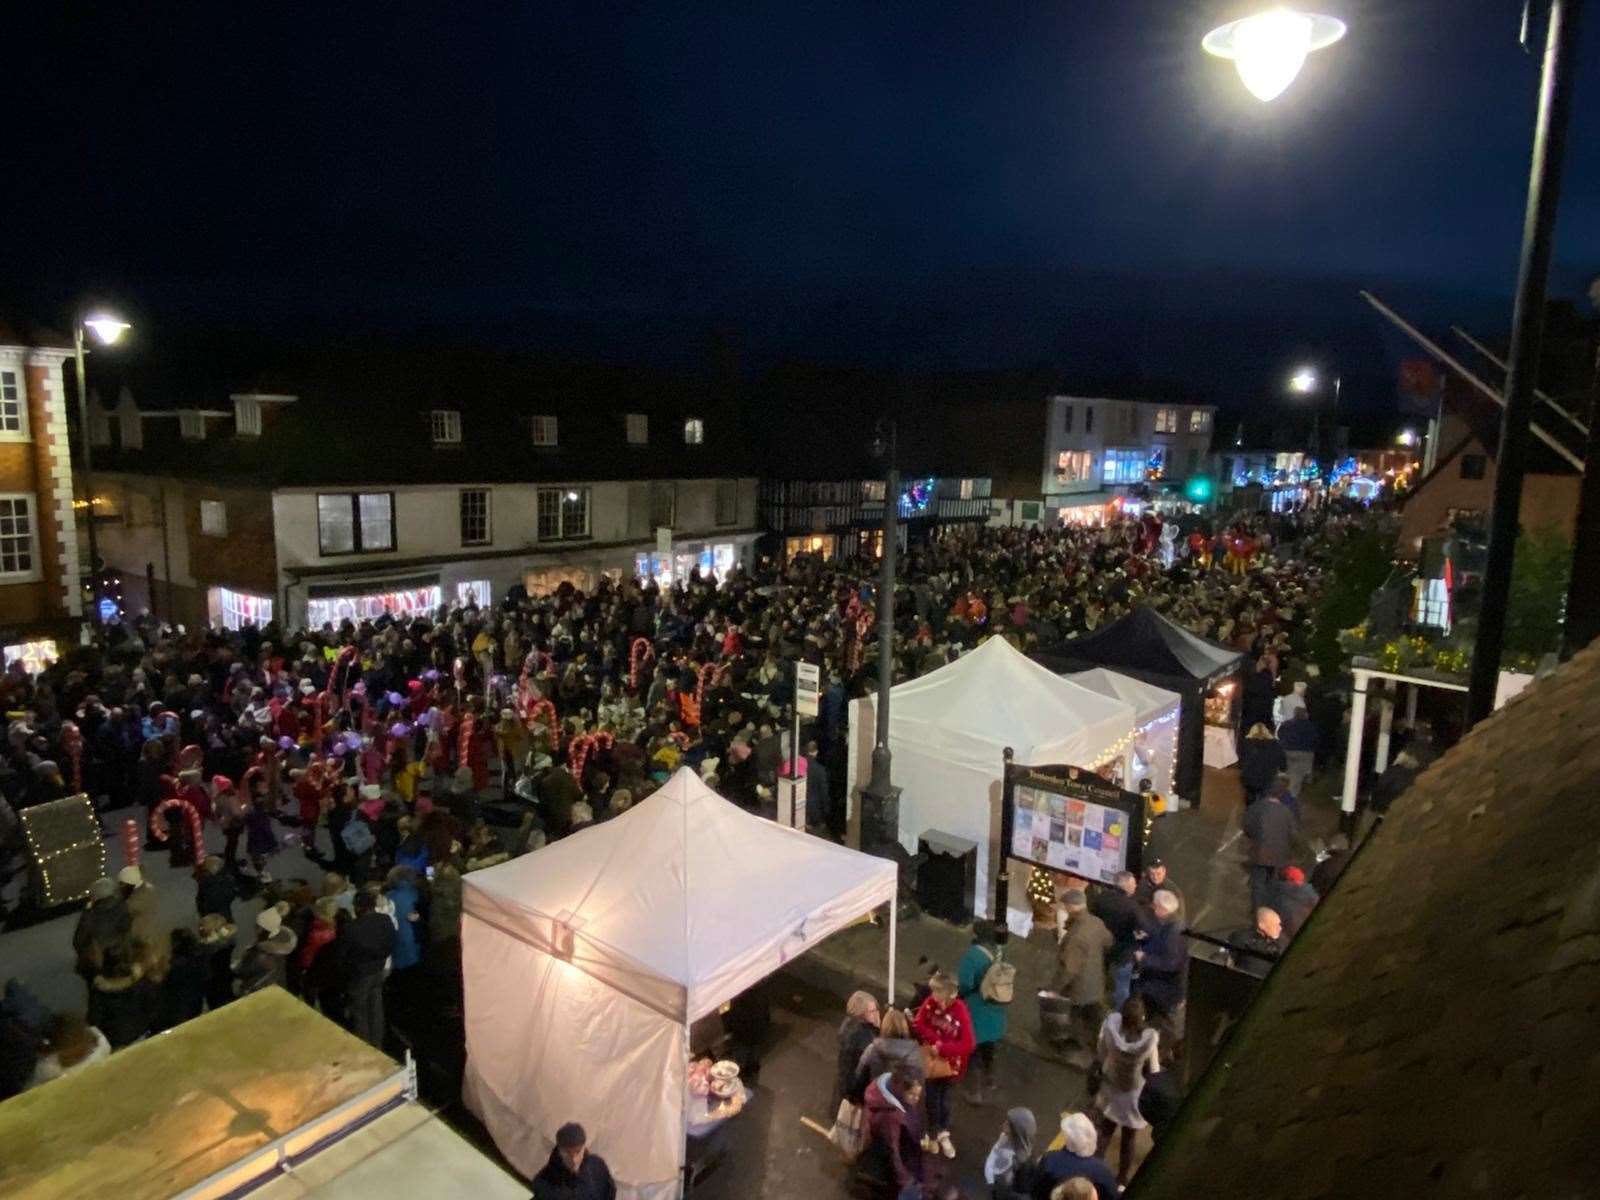 Crowds at Tenterden Christmas market